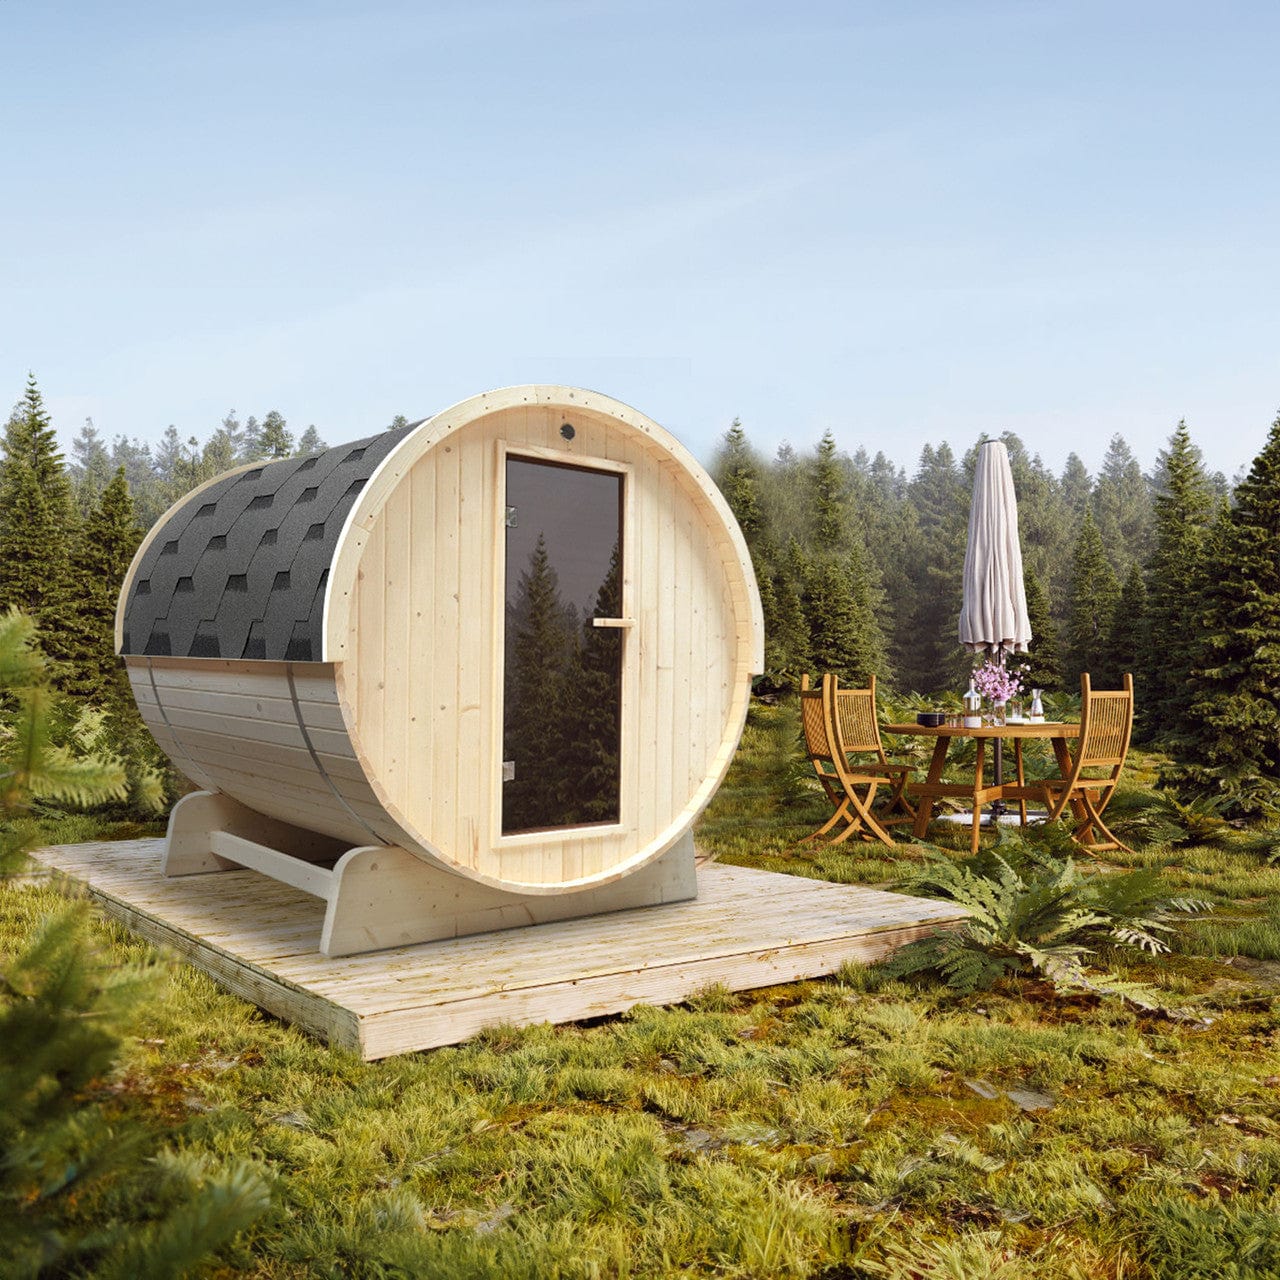 Aleko SB4PINE-AP Outdoor / Indoor White Pine 4-Person Barrel Sauna - with Bitumen Shingle Roofing